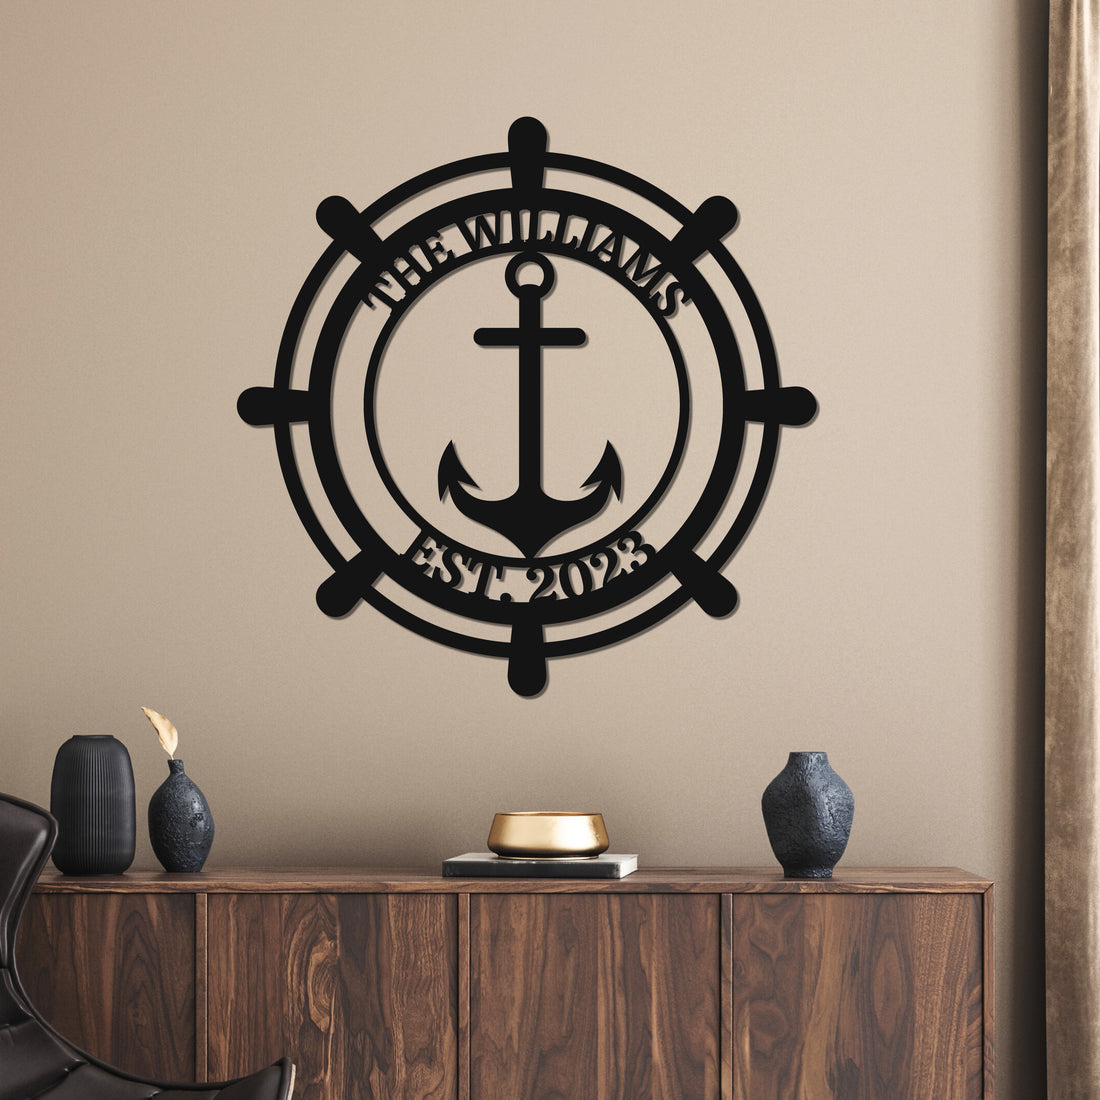 Personalised Family Name Sea Anchor Sign, Customised Nautical Wall Hanging Art, Stylish Hampton Beach House Decor, Ship's Wheel Hoop, Housewarming, Navy, Sailor Graduation Gift